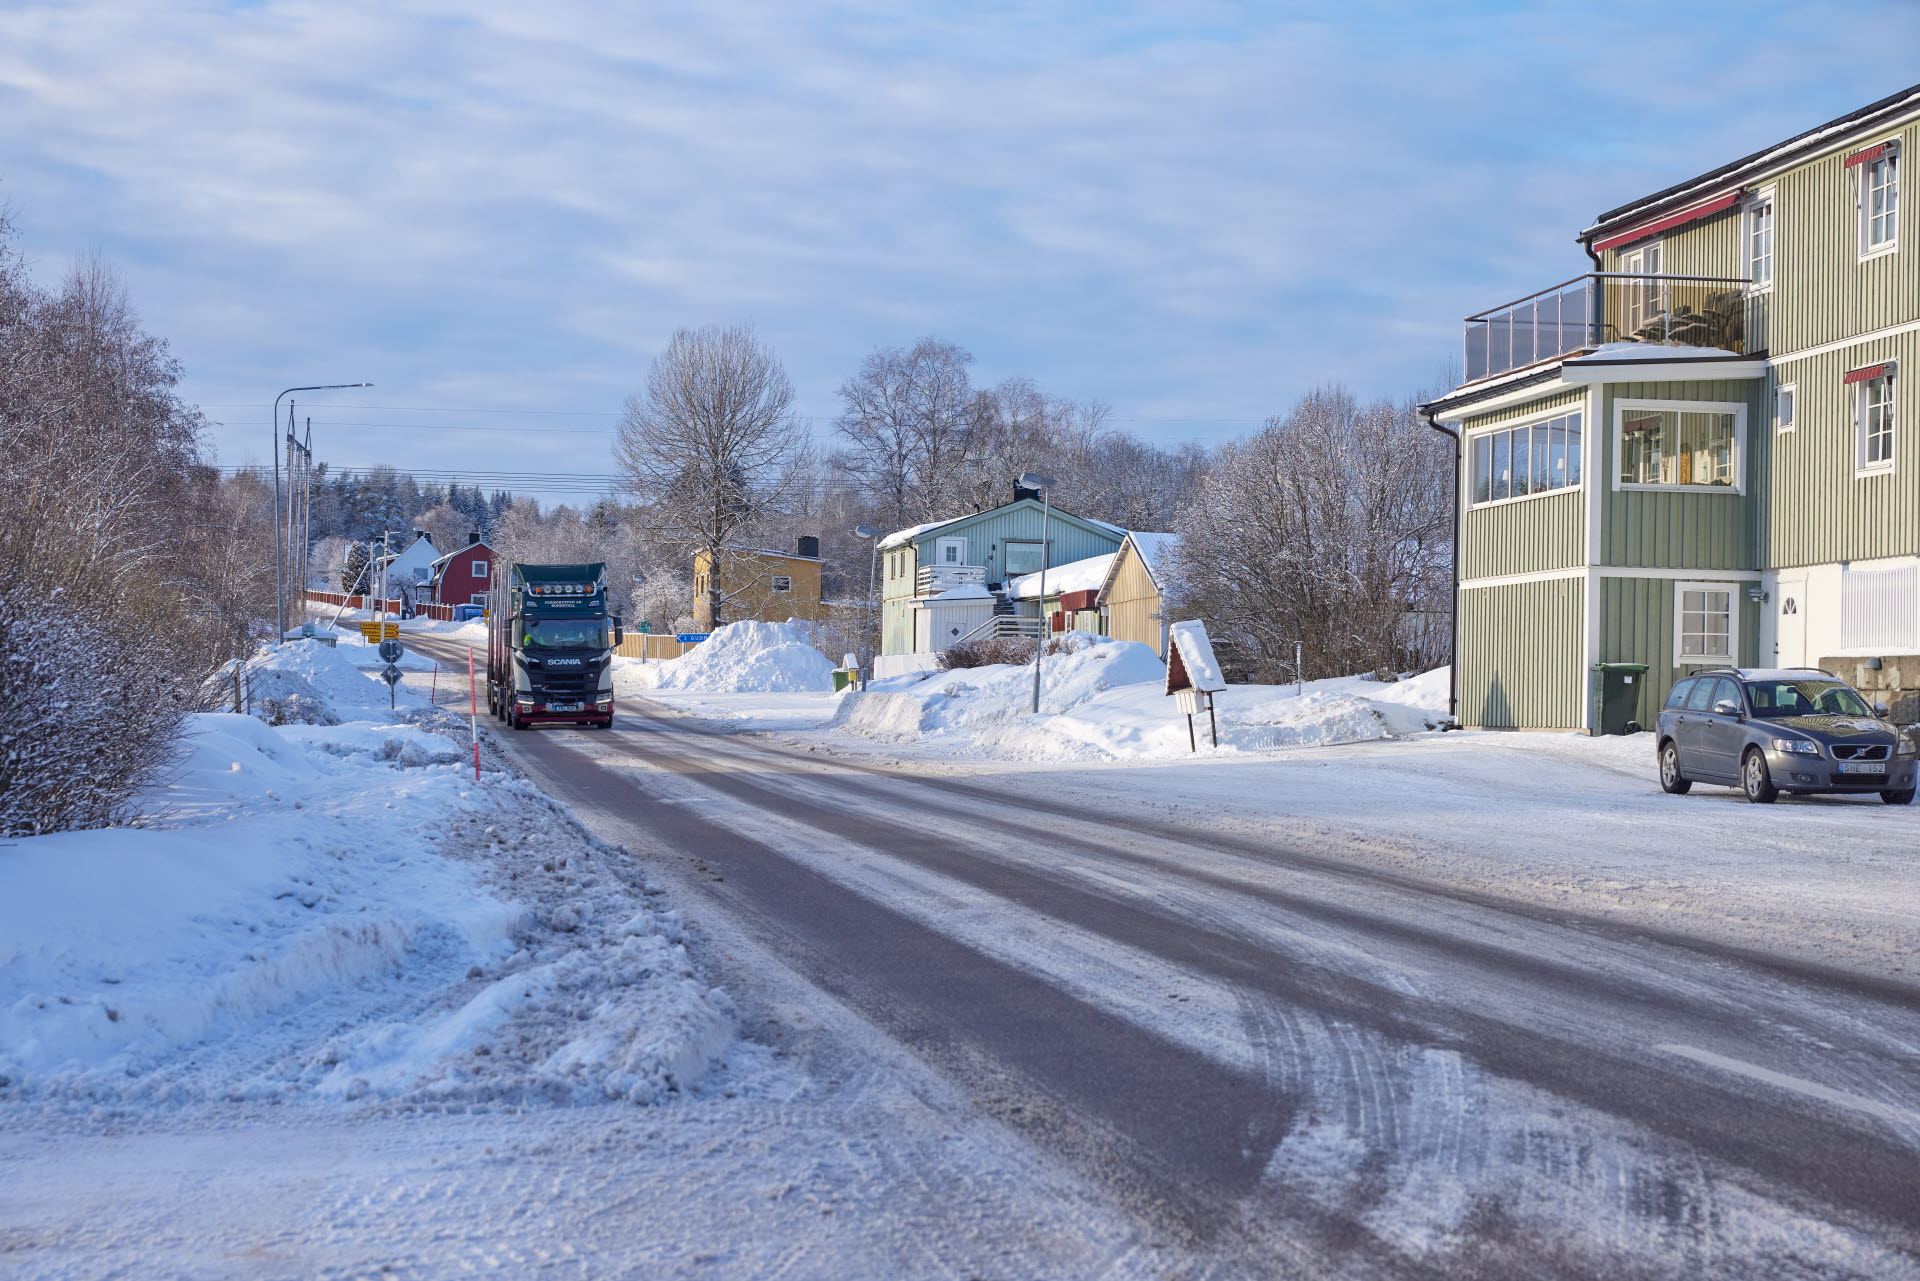 Timmerbil kör genom byn Laggerberg